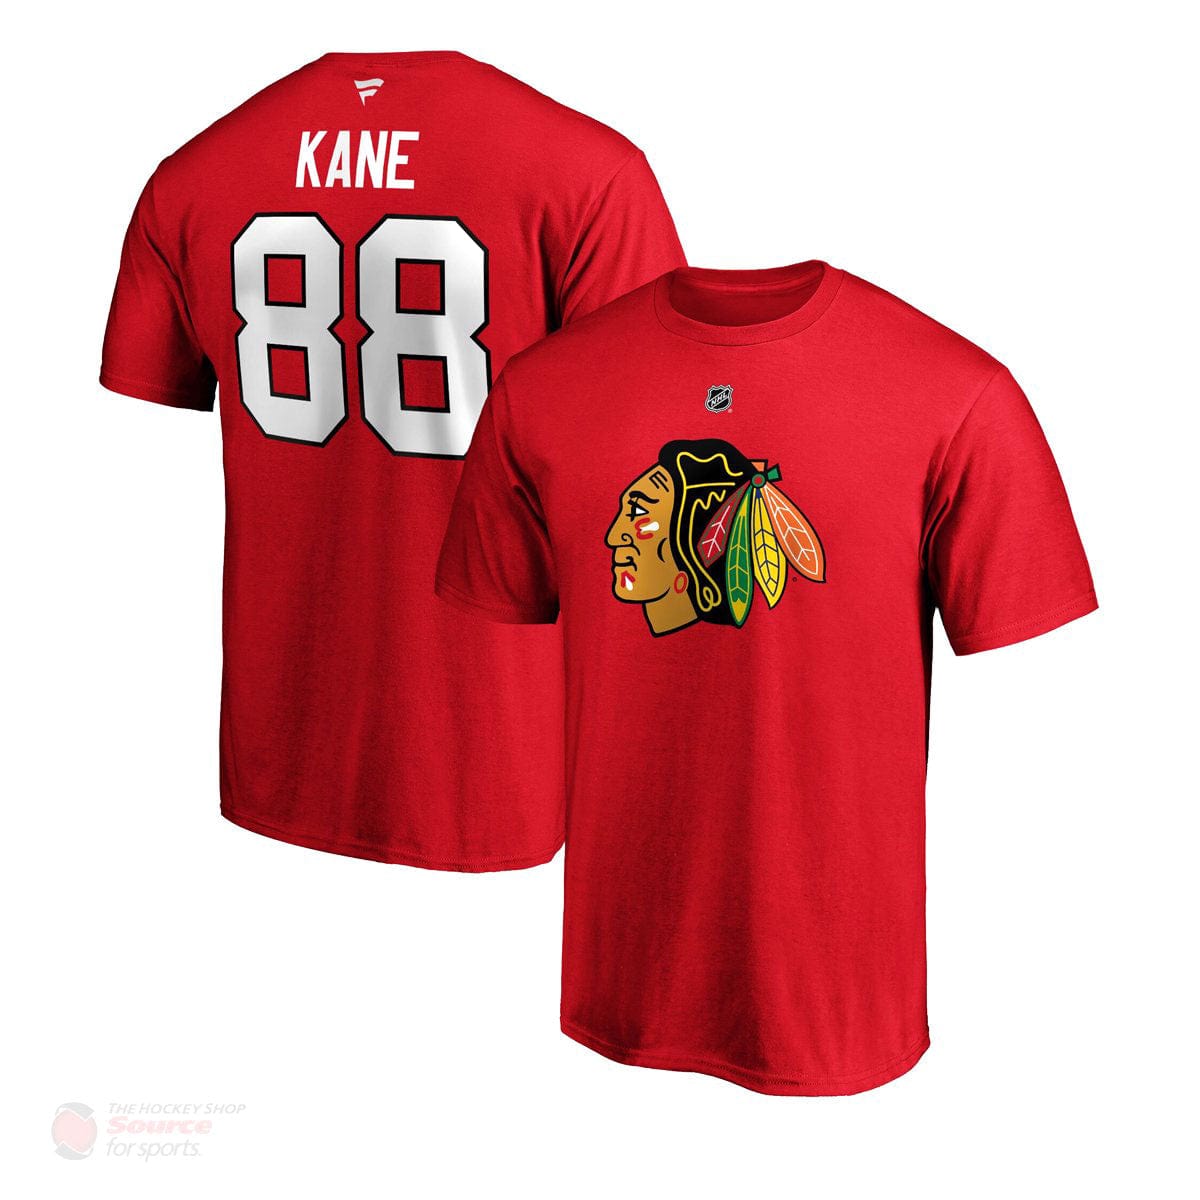 Chicago Blackhawks Fanatics Authentic Name & Number Mens Shirt - Patrick Kane